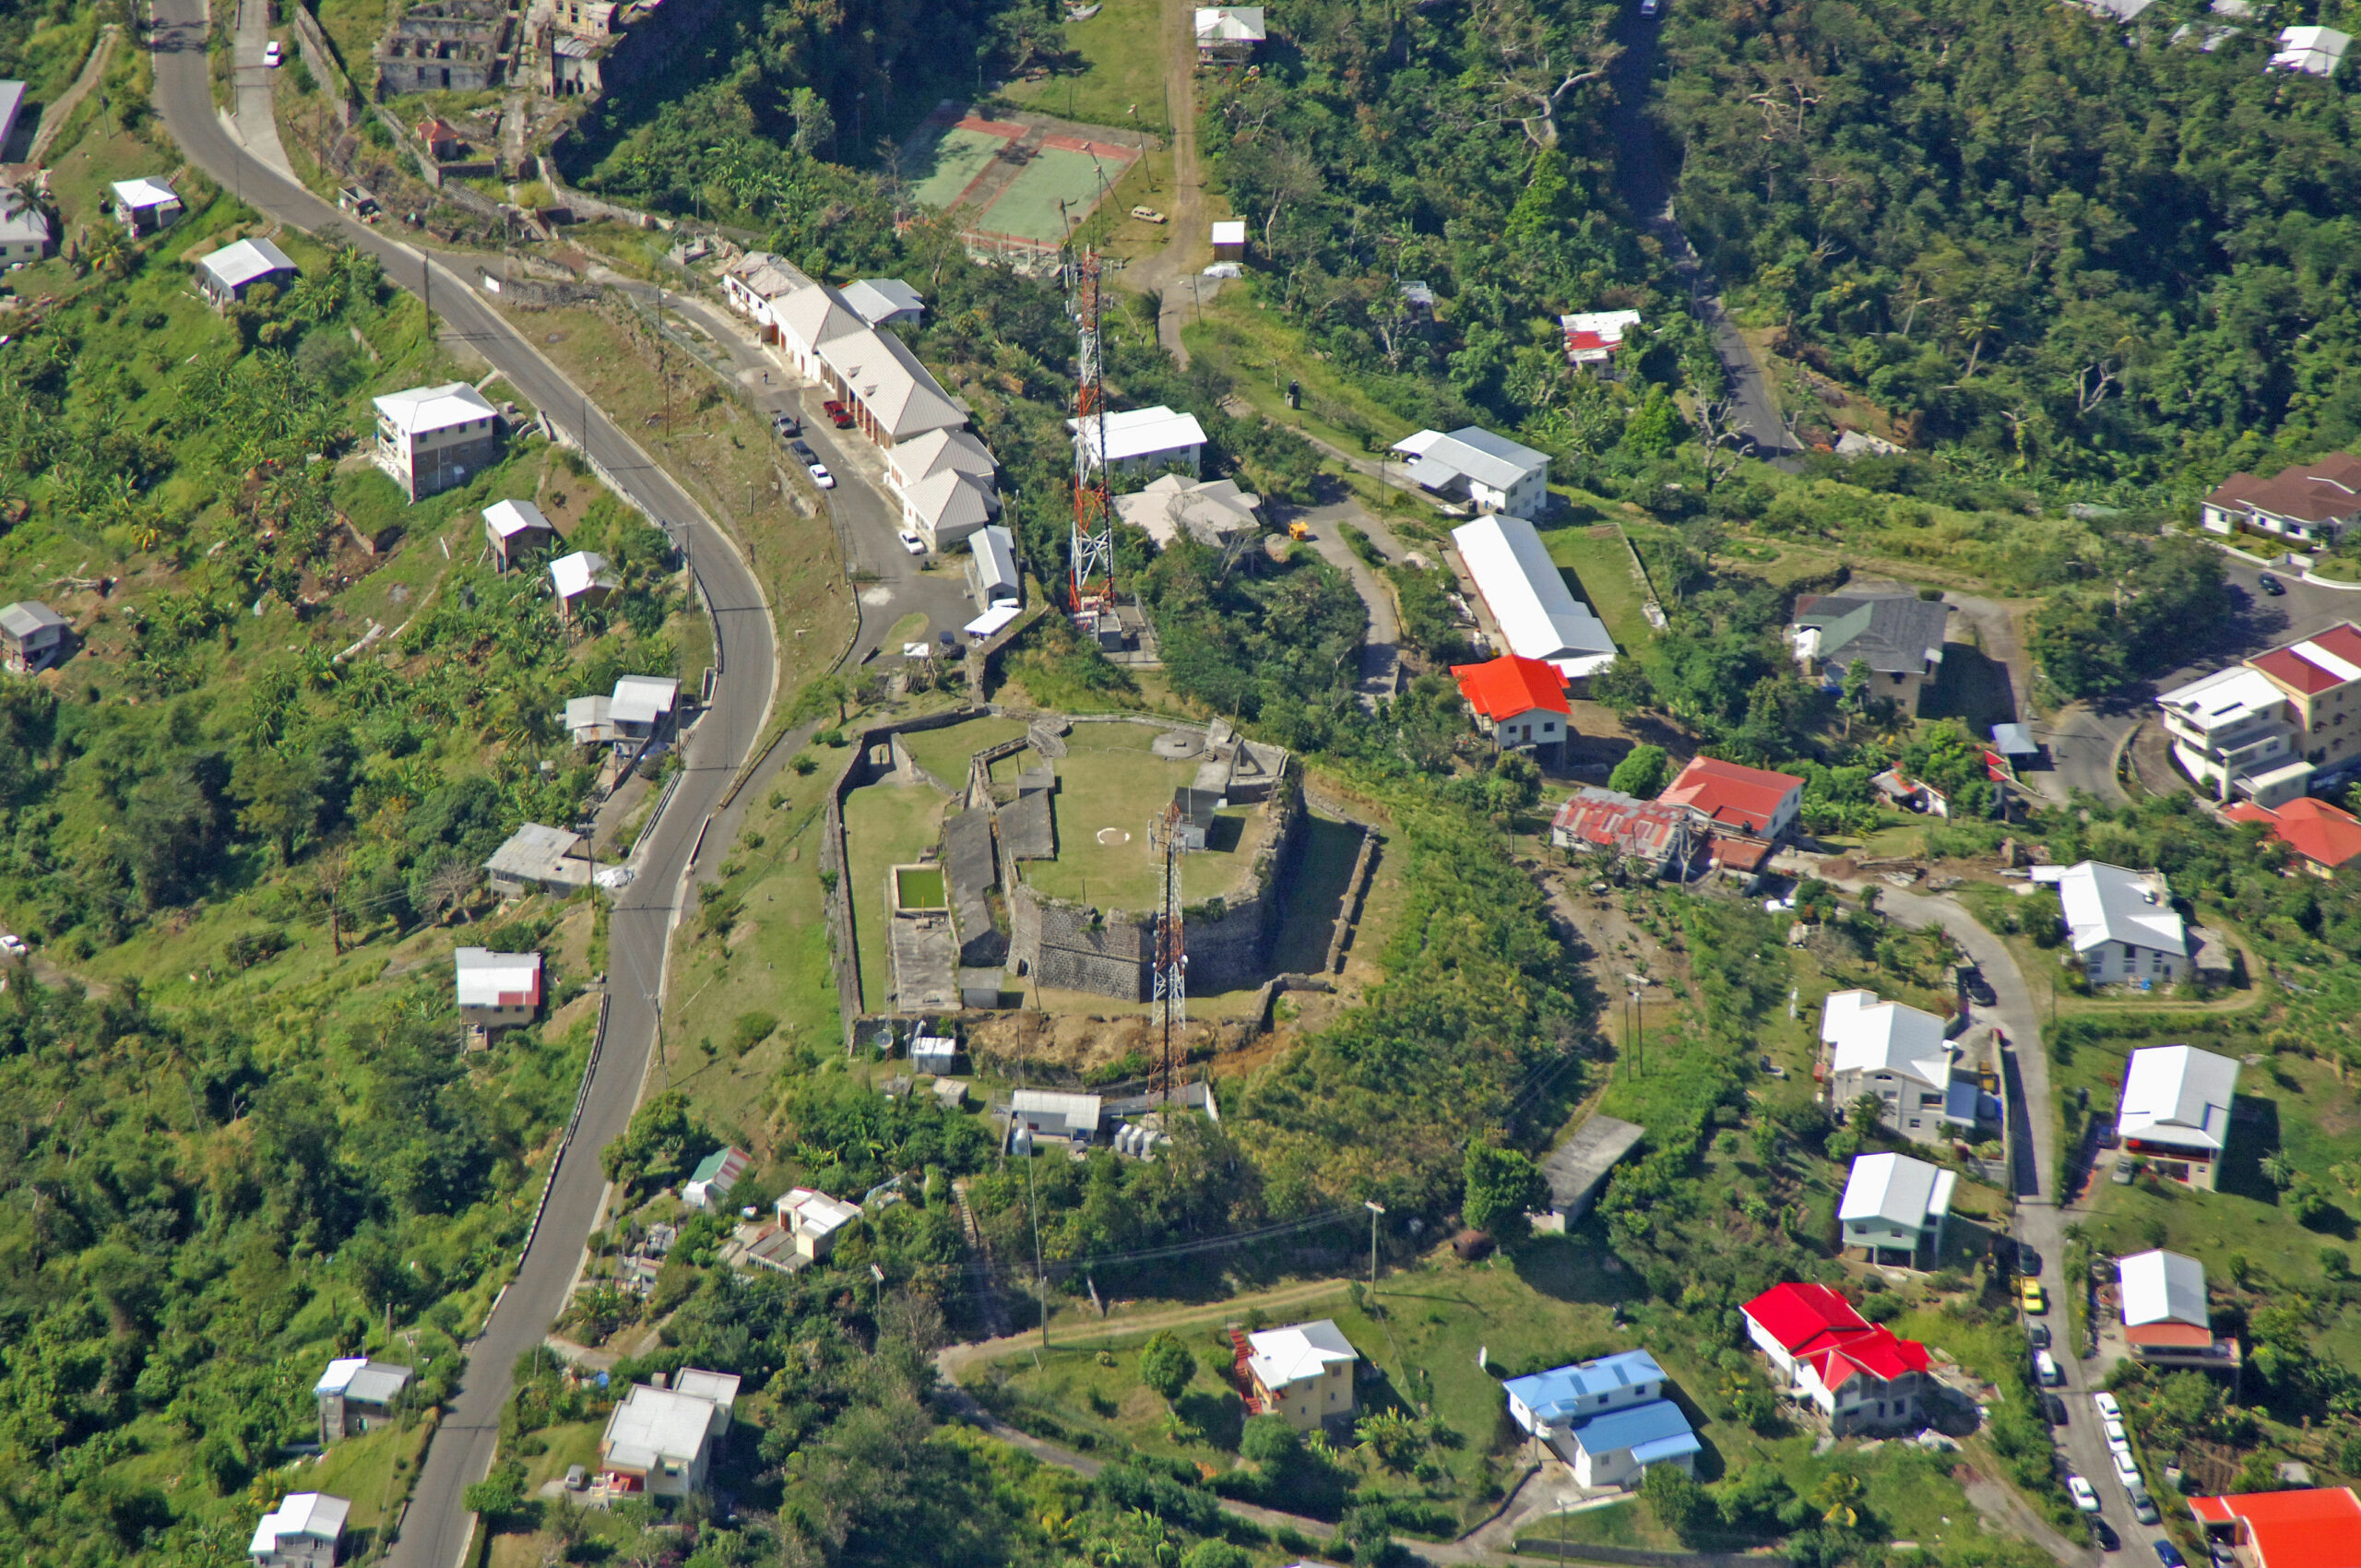 National monument of Grenada - Fort Frederick